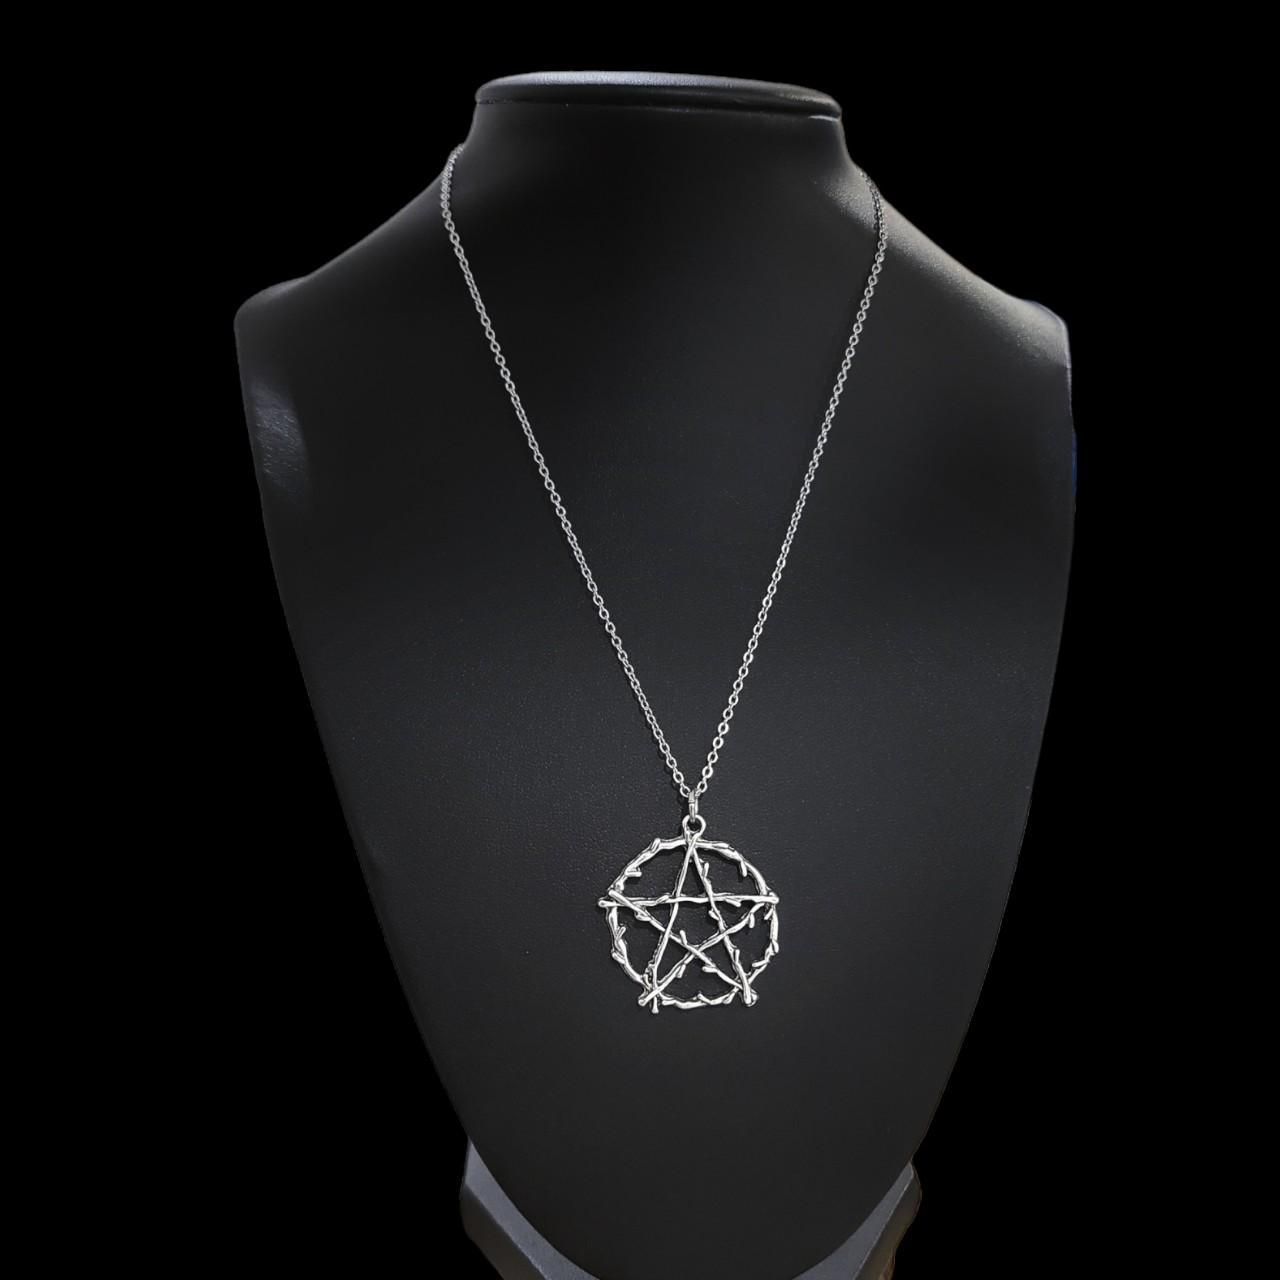 Product Image 4 - 18" Silver Branch Pentagram Necklace
...
Vine